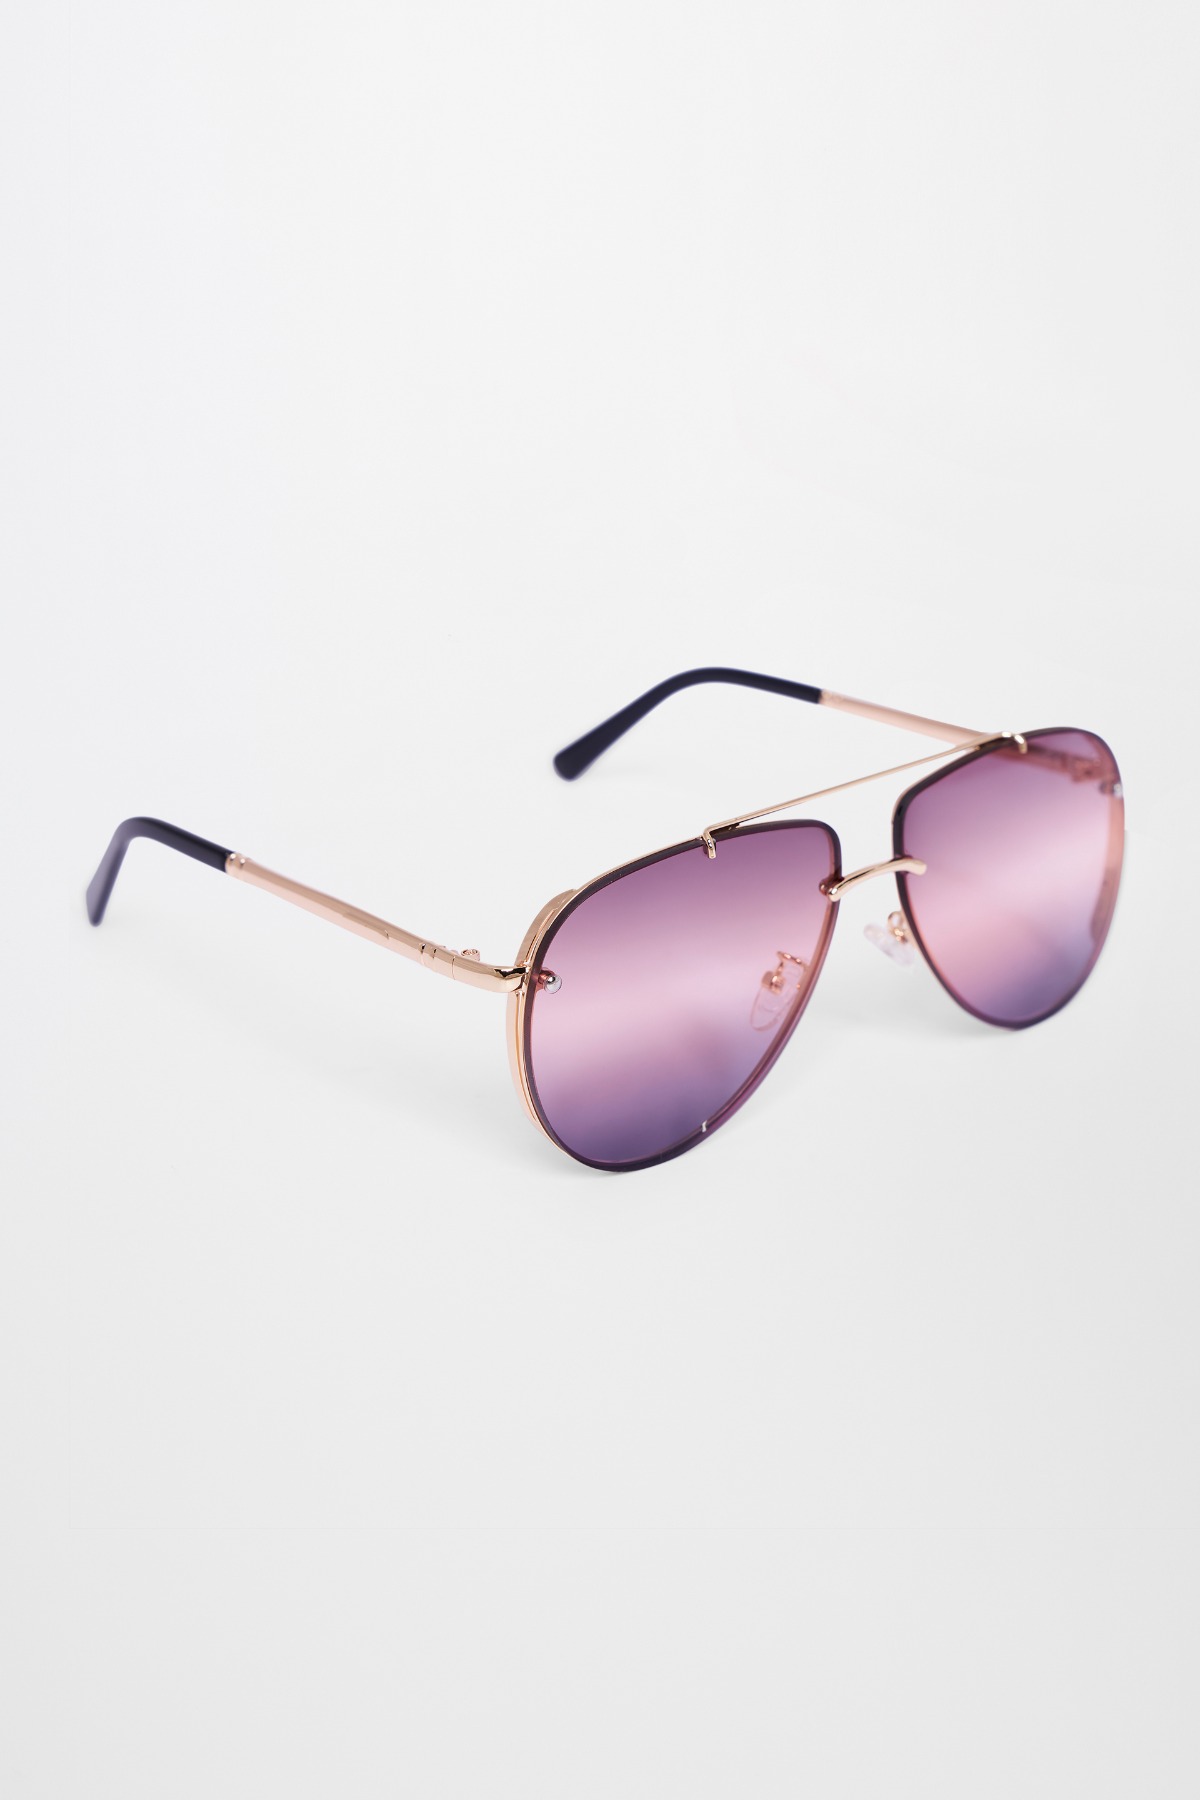 1 - Pink Sunglasses, image 1